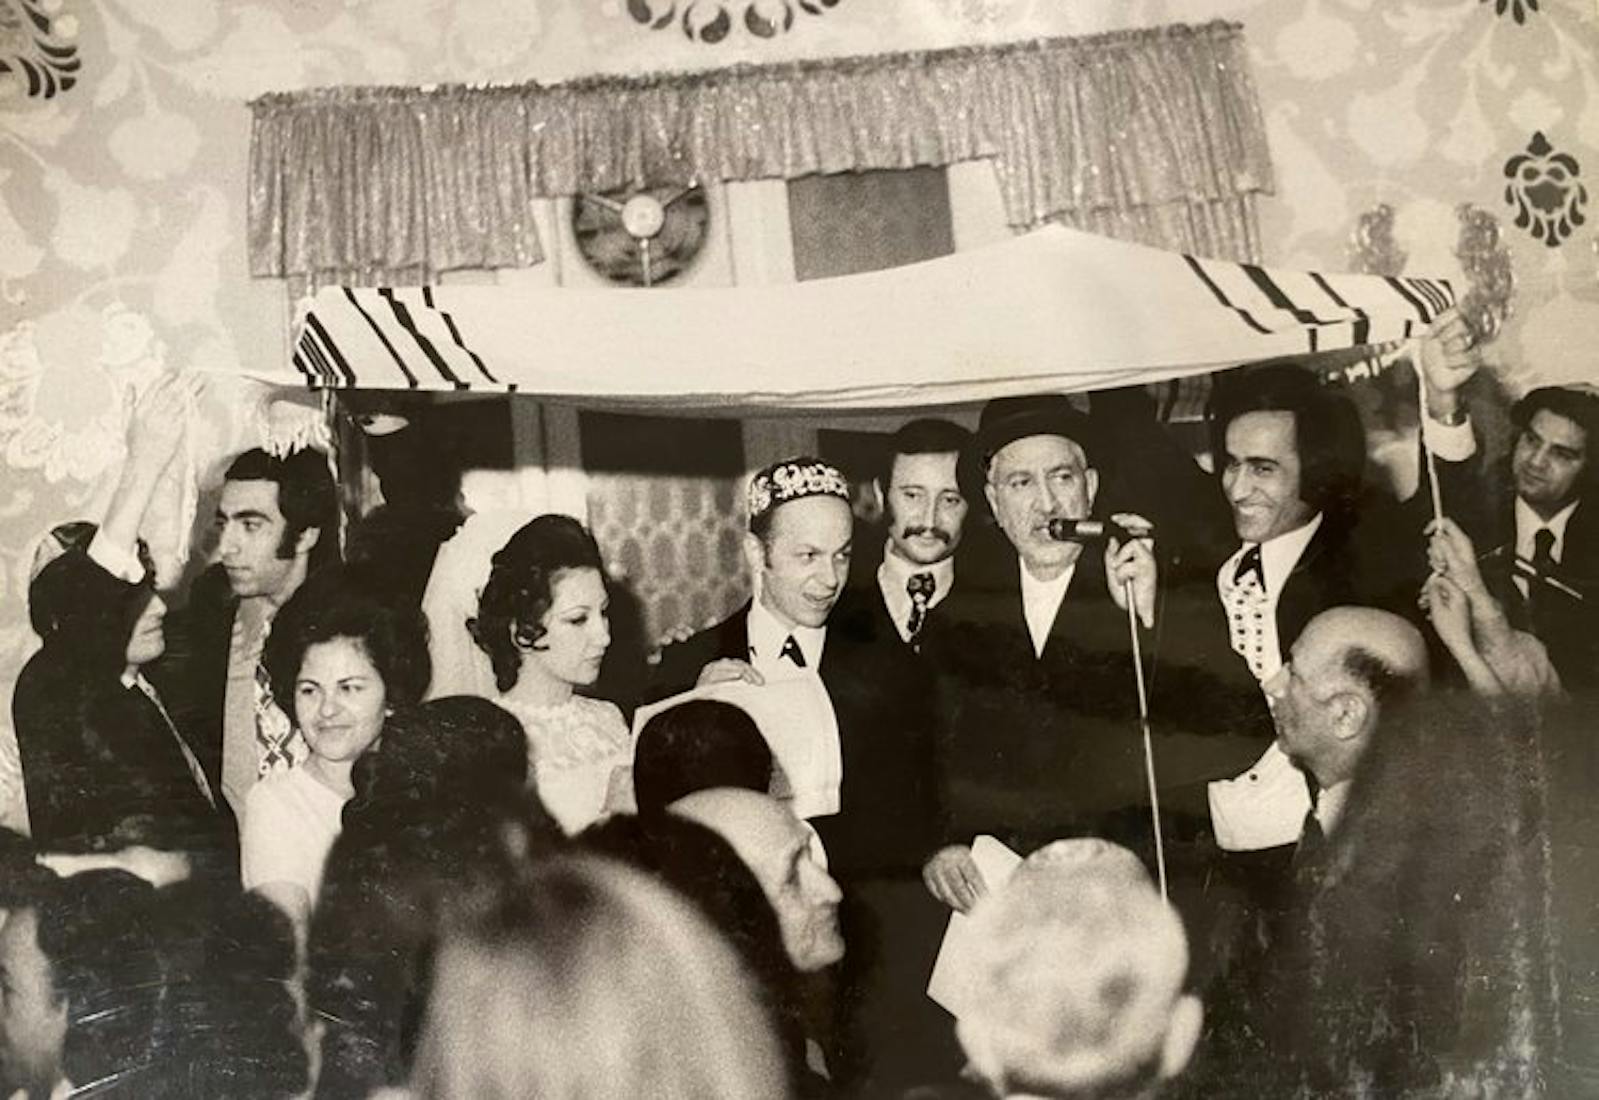 Akhtar and David Somekh’s wedding in Tehran, December 26, 1973.